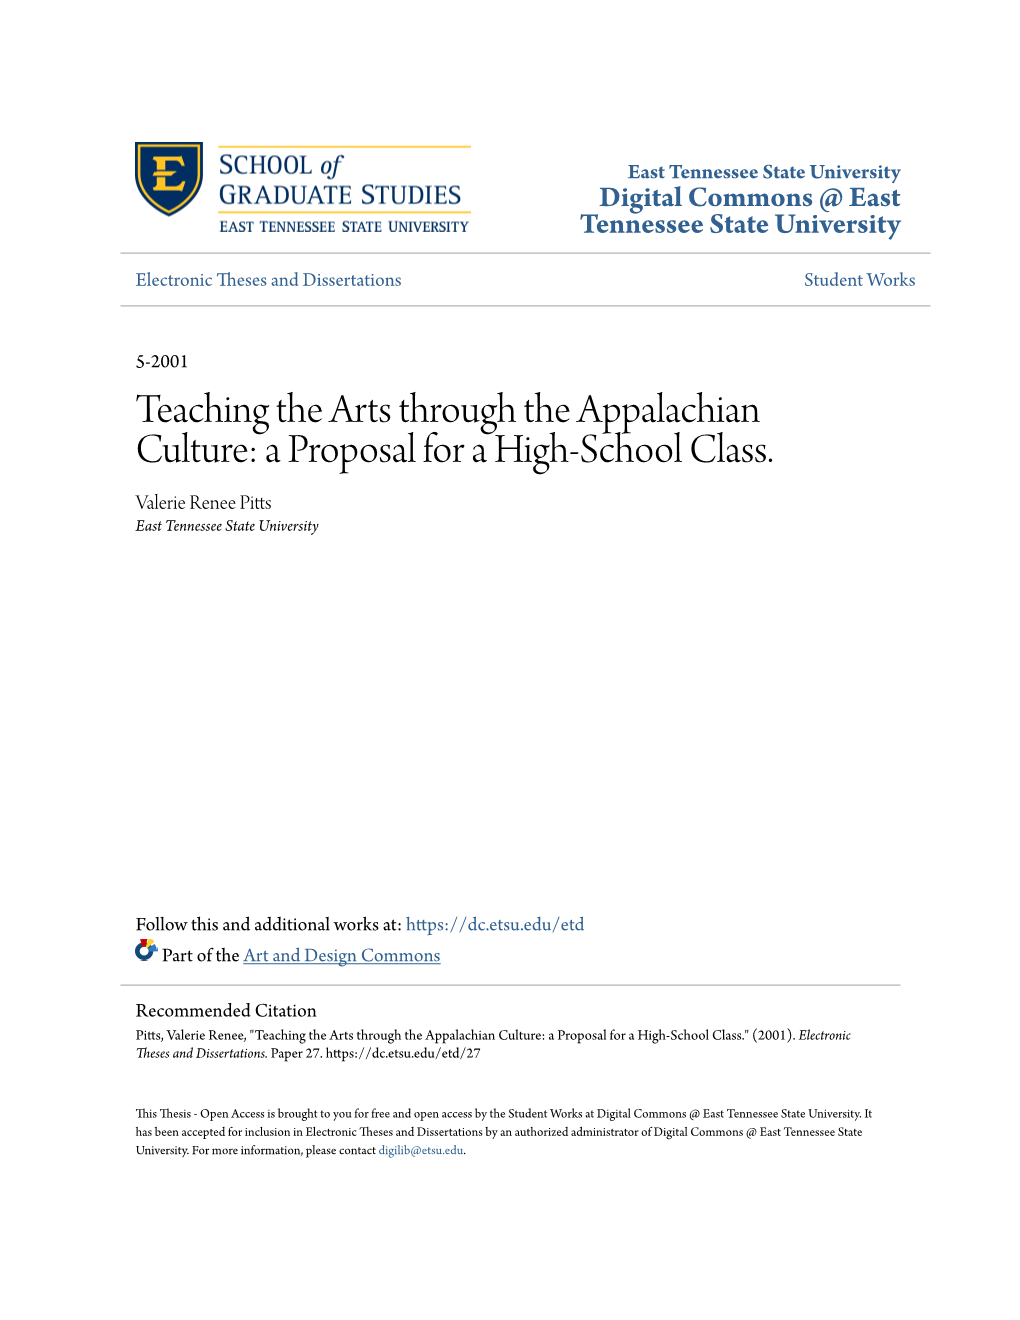 Teaching the Arts Through the Appalachian Culture: a Proposal for a High-School Class